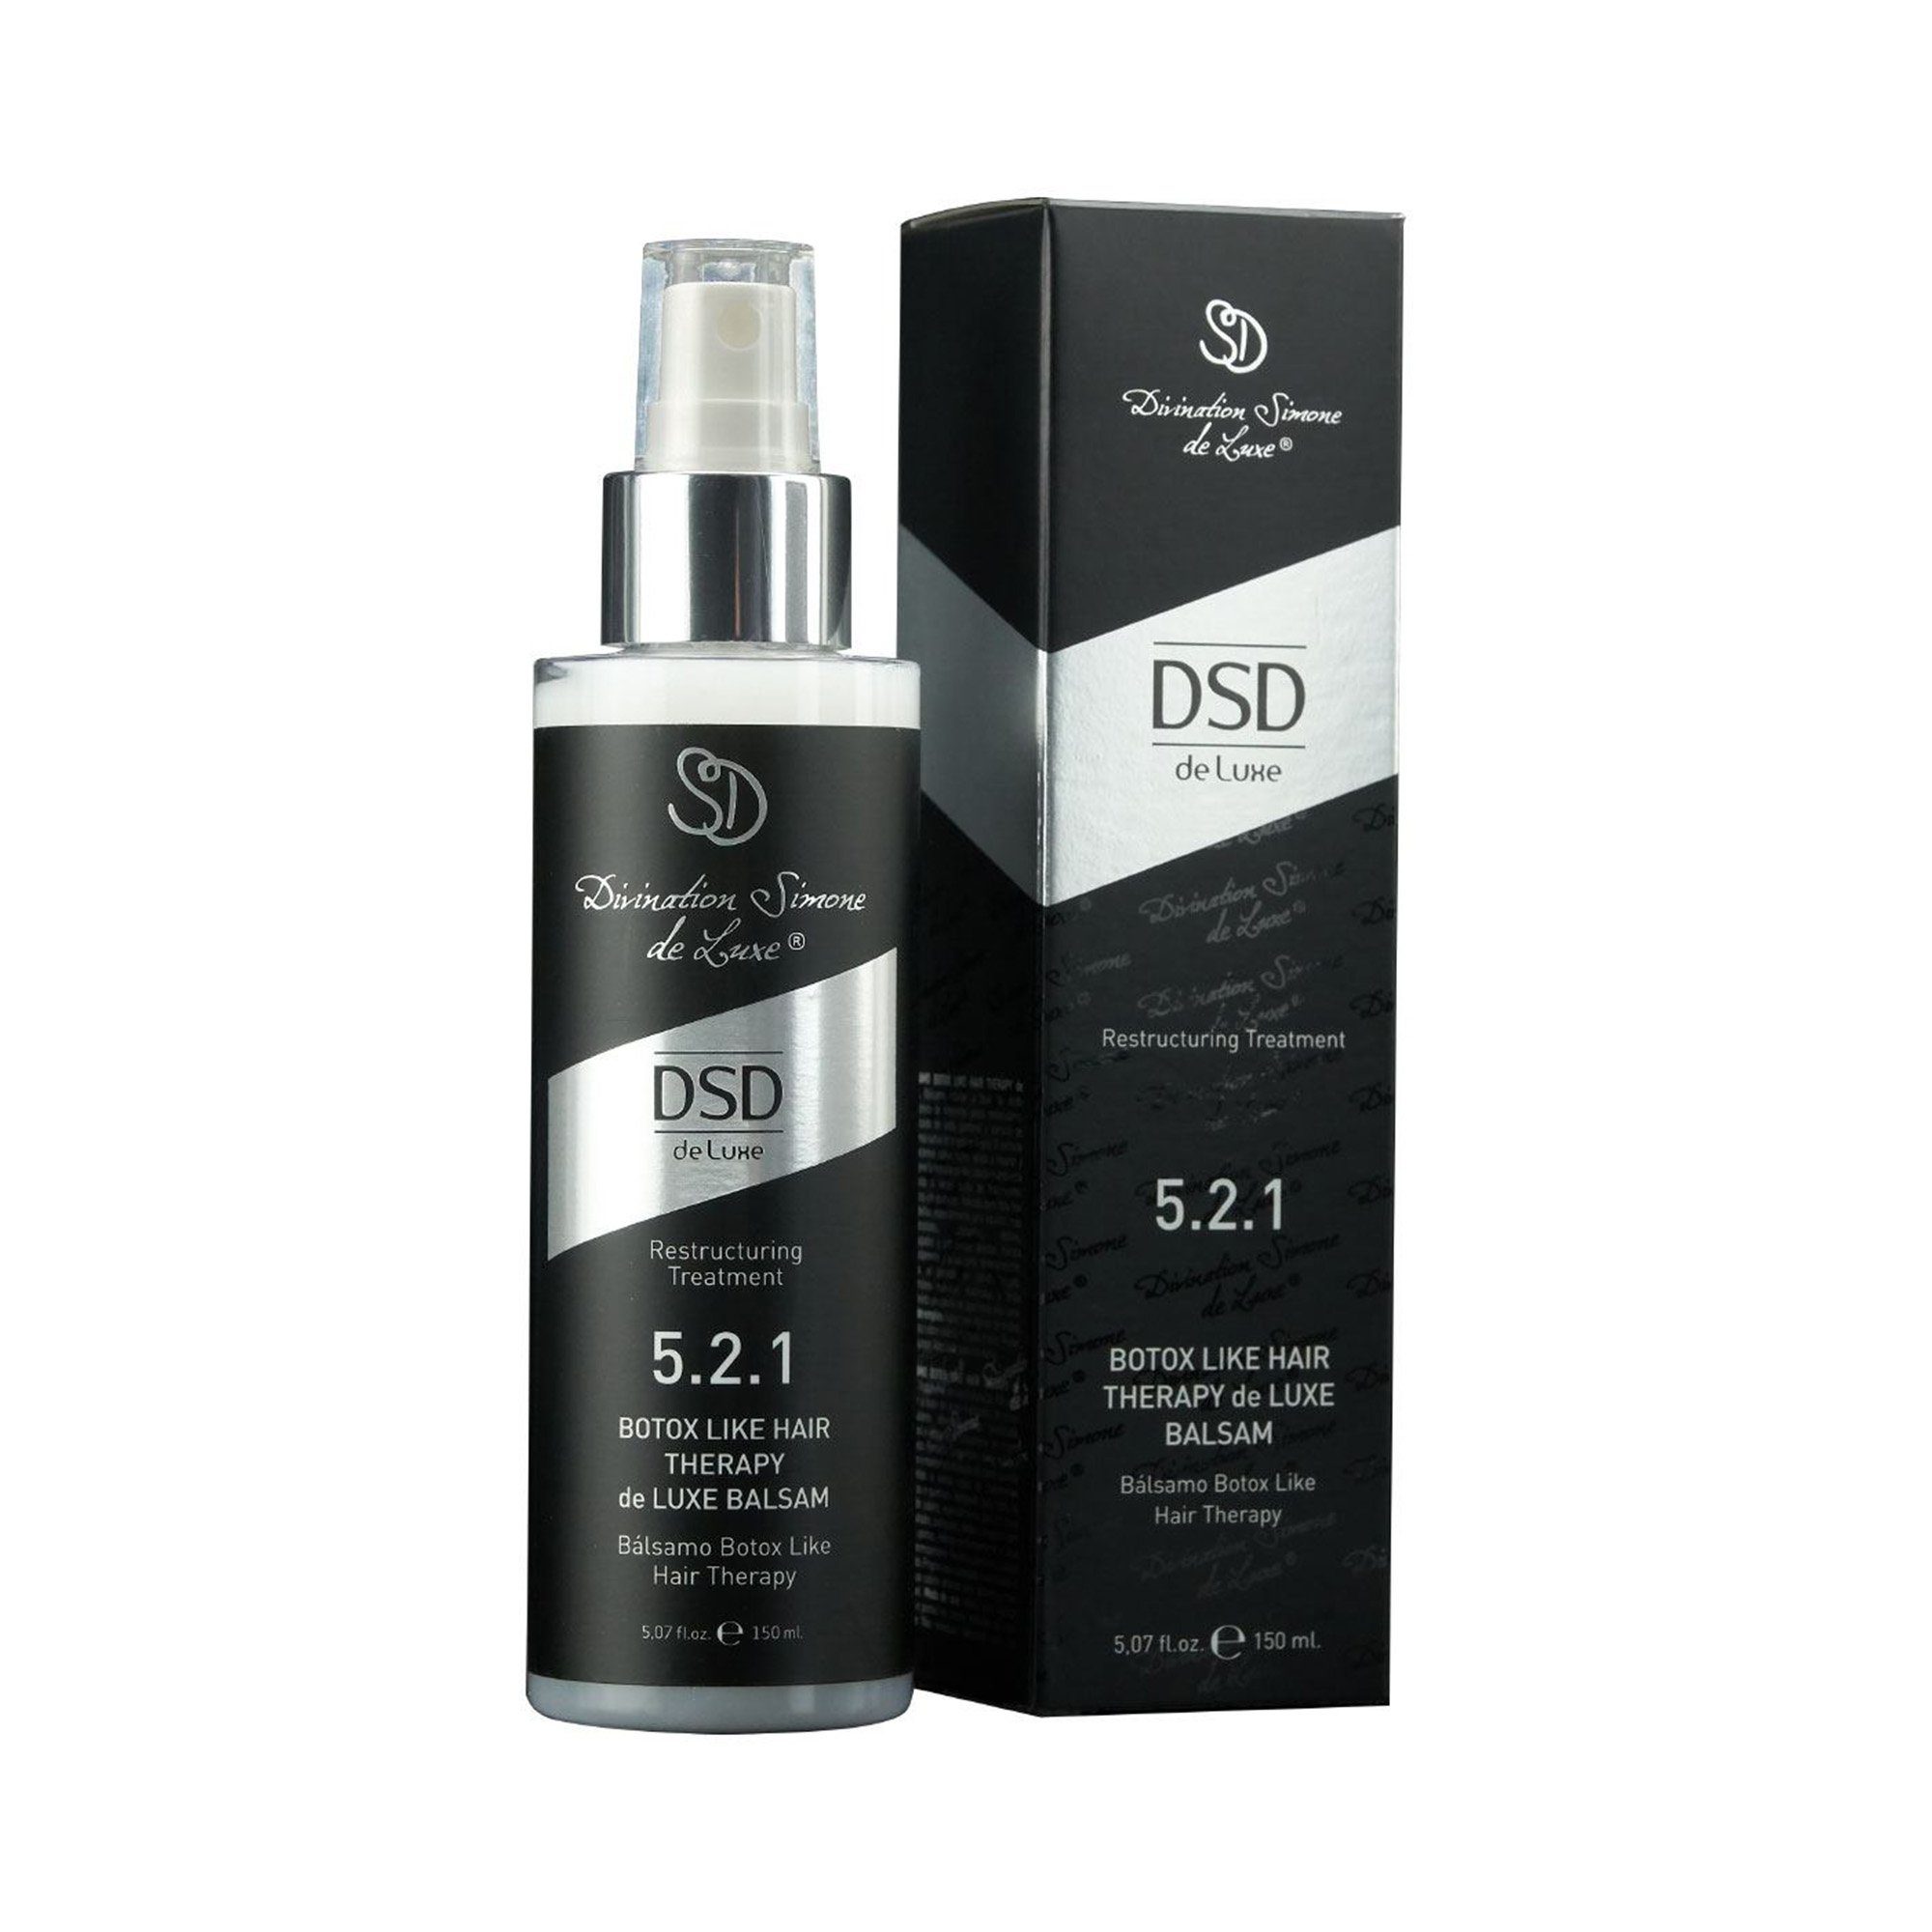 DSD de Luxe Haarpflege-Set 5.2.1 Botox Like Hair Therapy, 1-tlg.